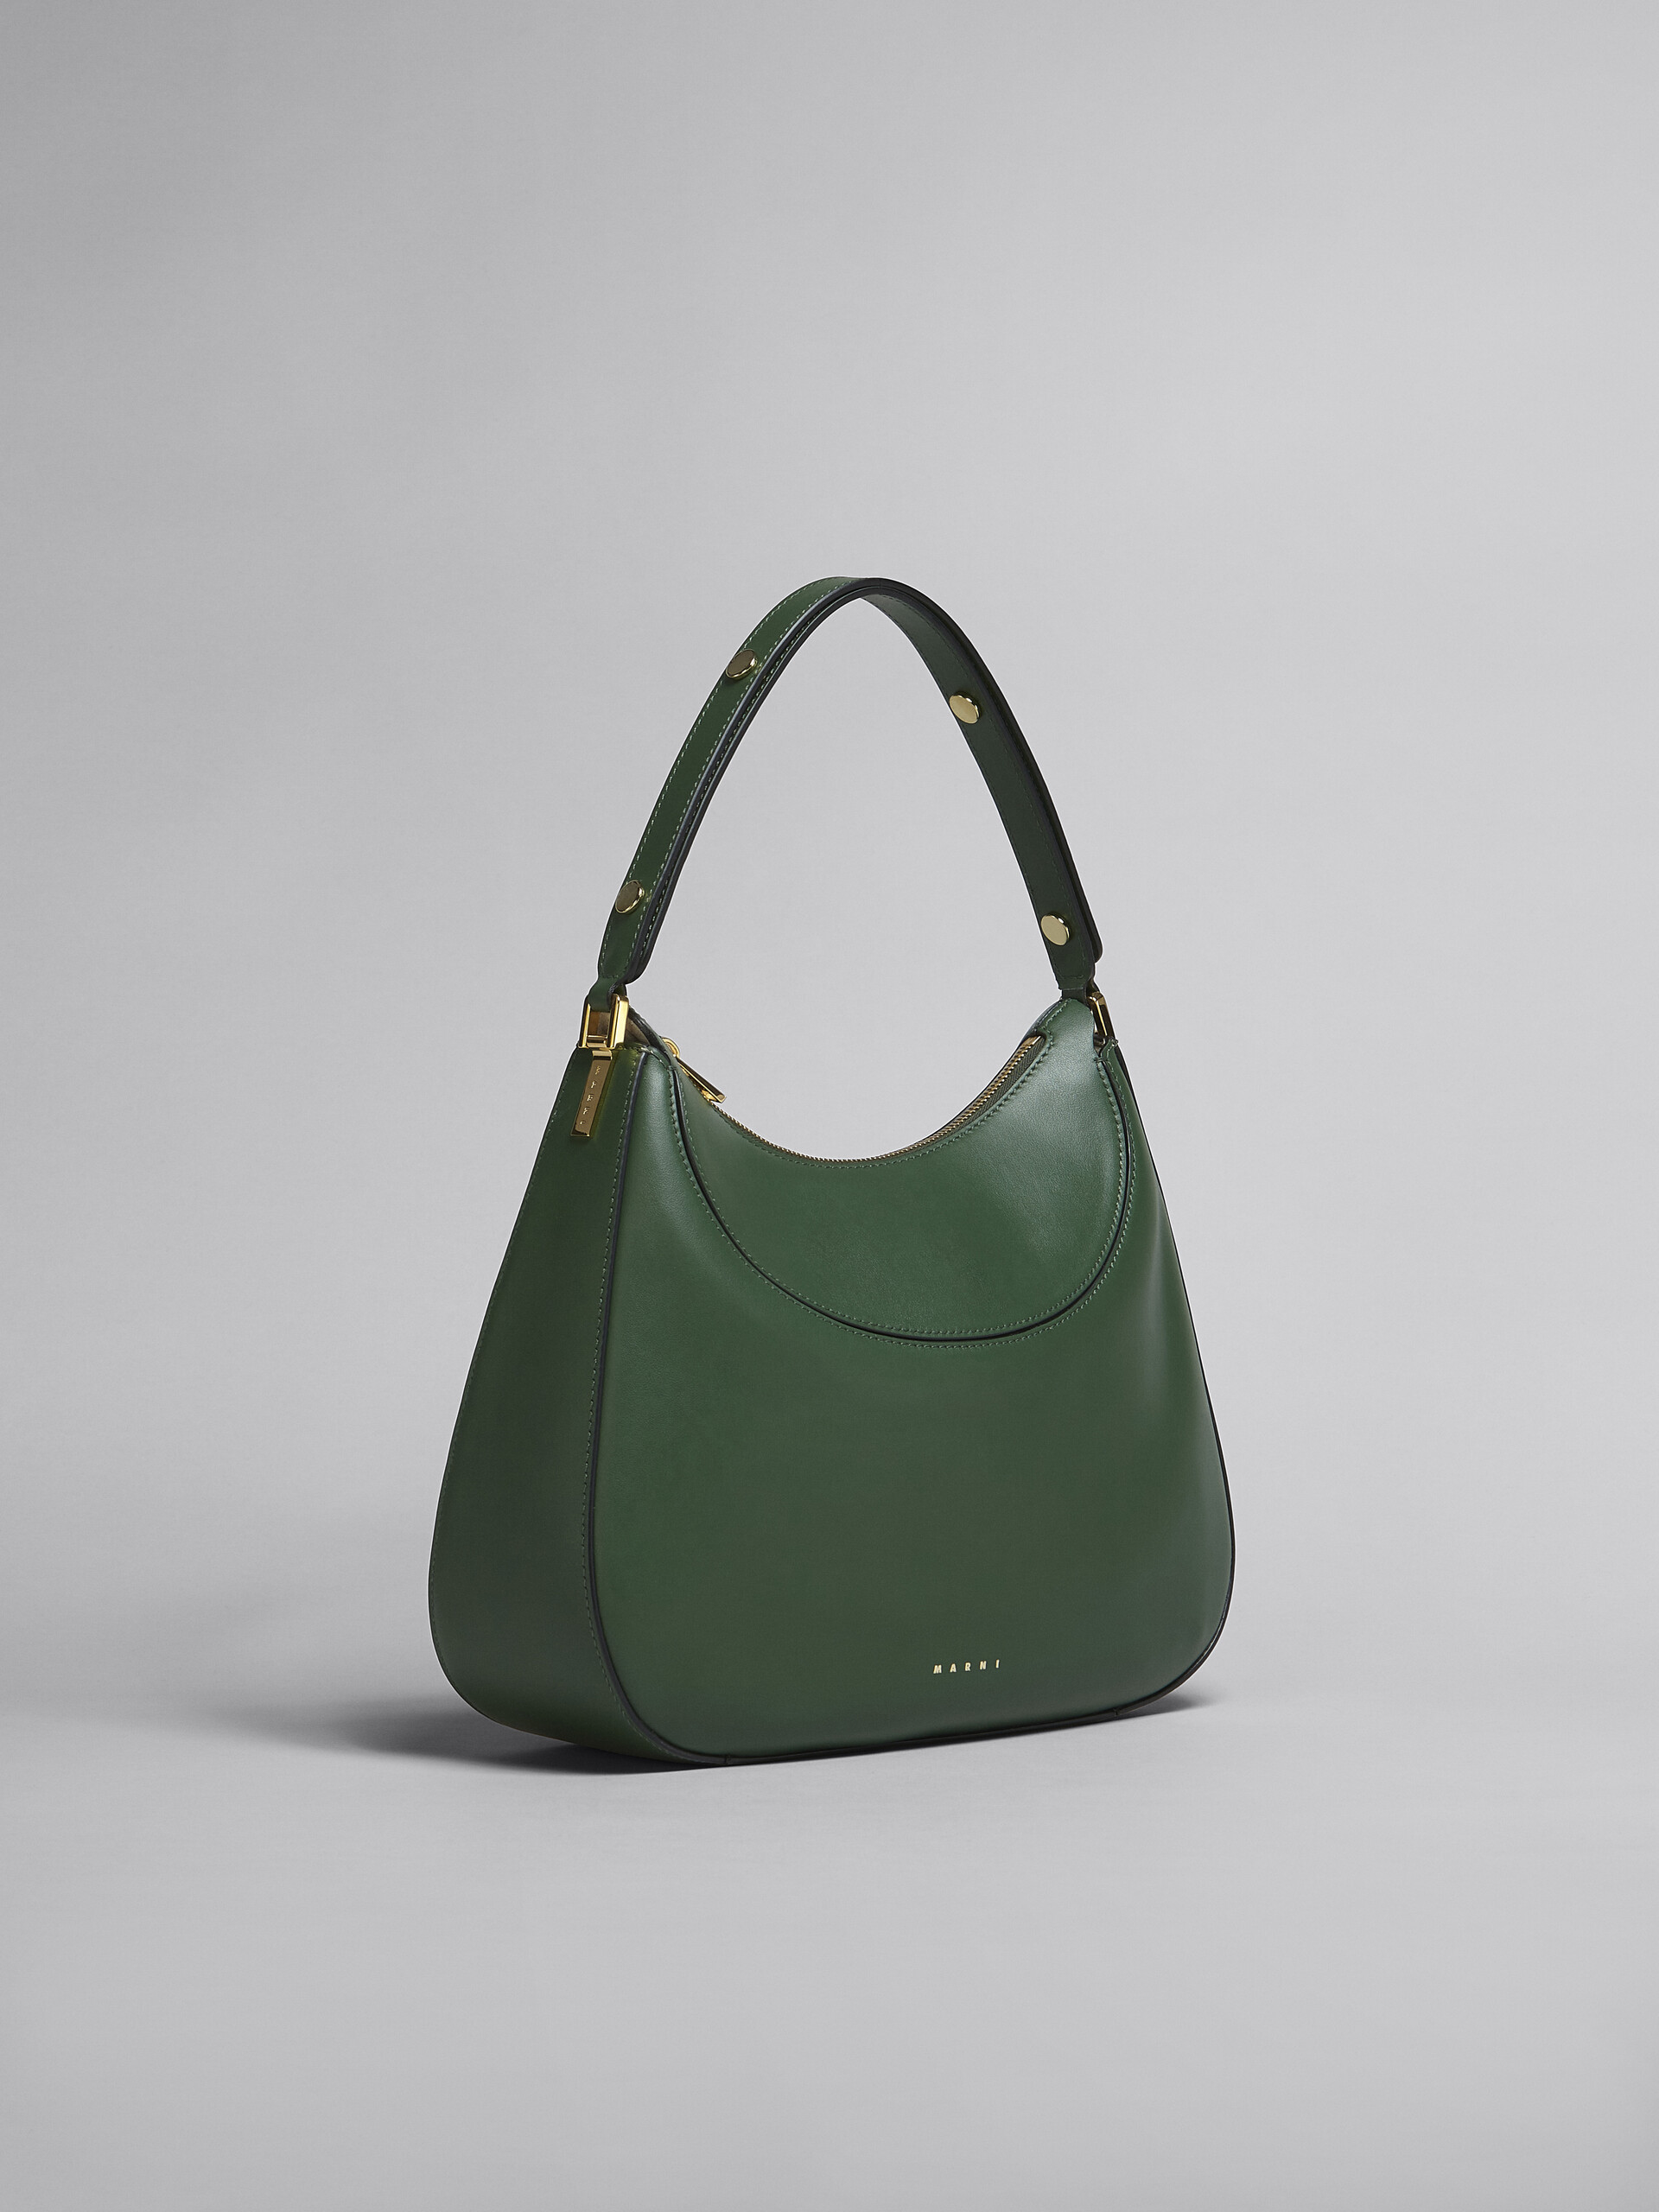 Milano bag grande in pelle verde - Borse a mano - Image 6